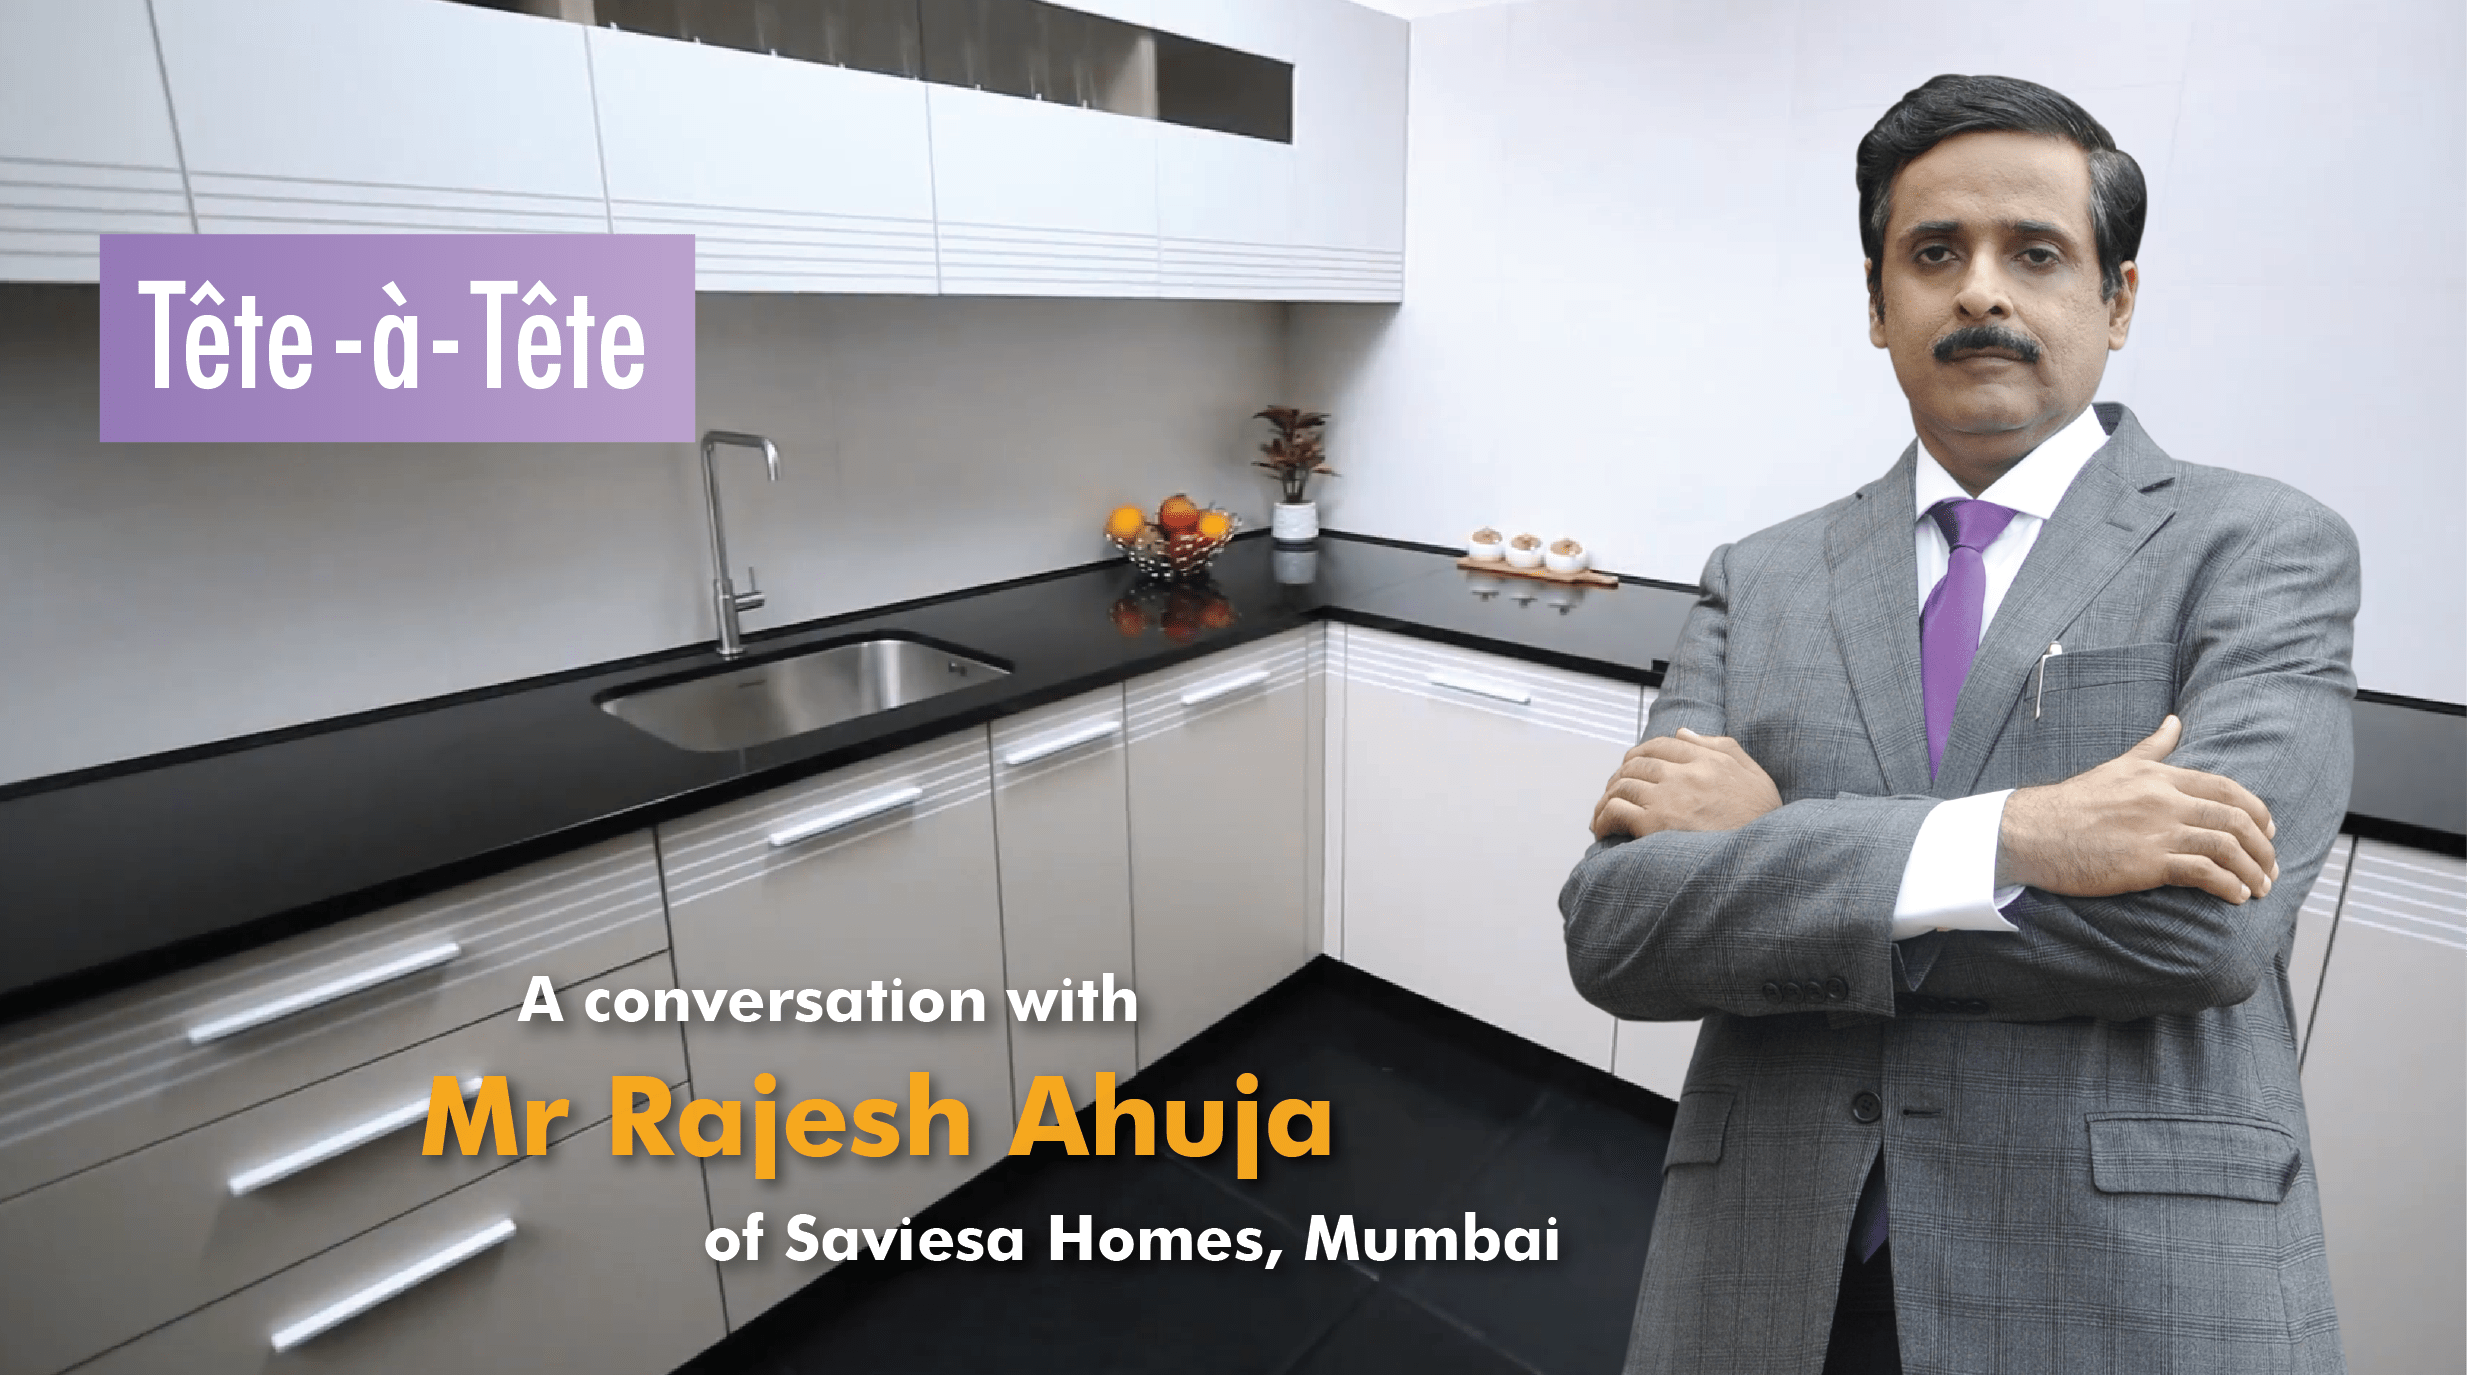 Conversation with Rajesh Ahuja of Saviesa Homes